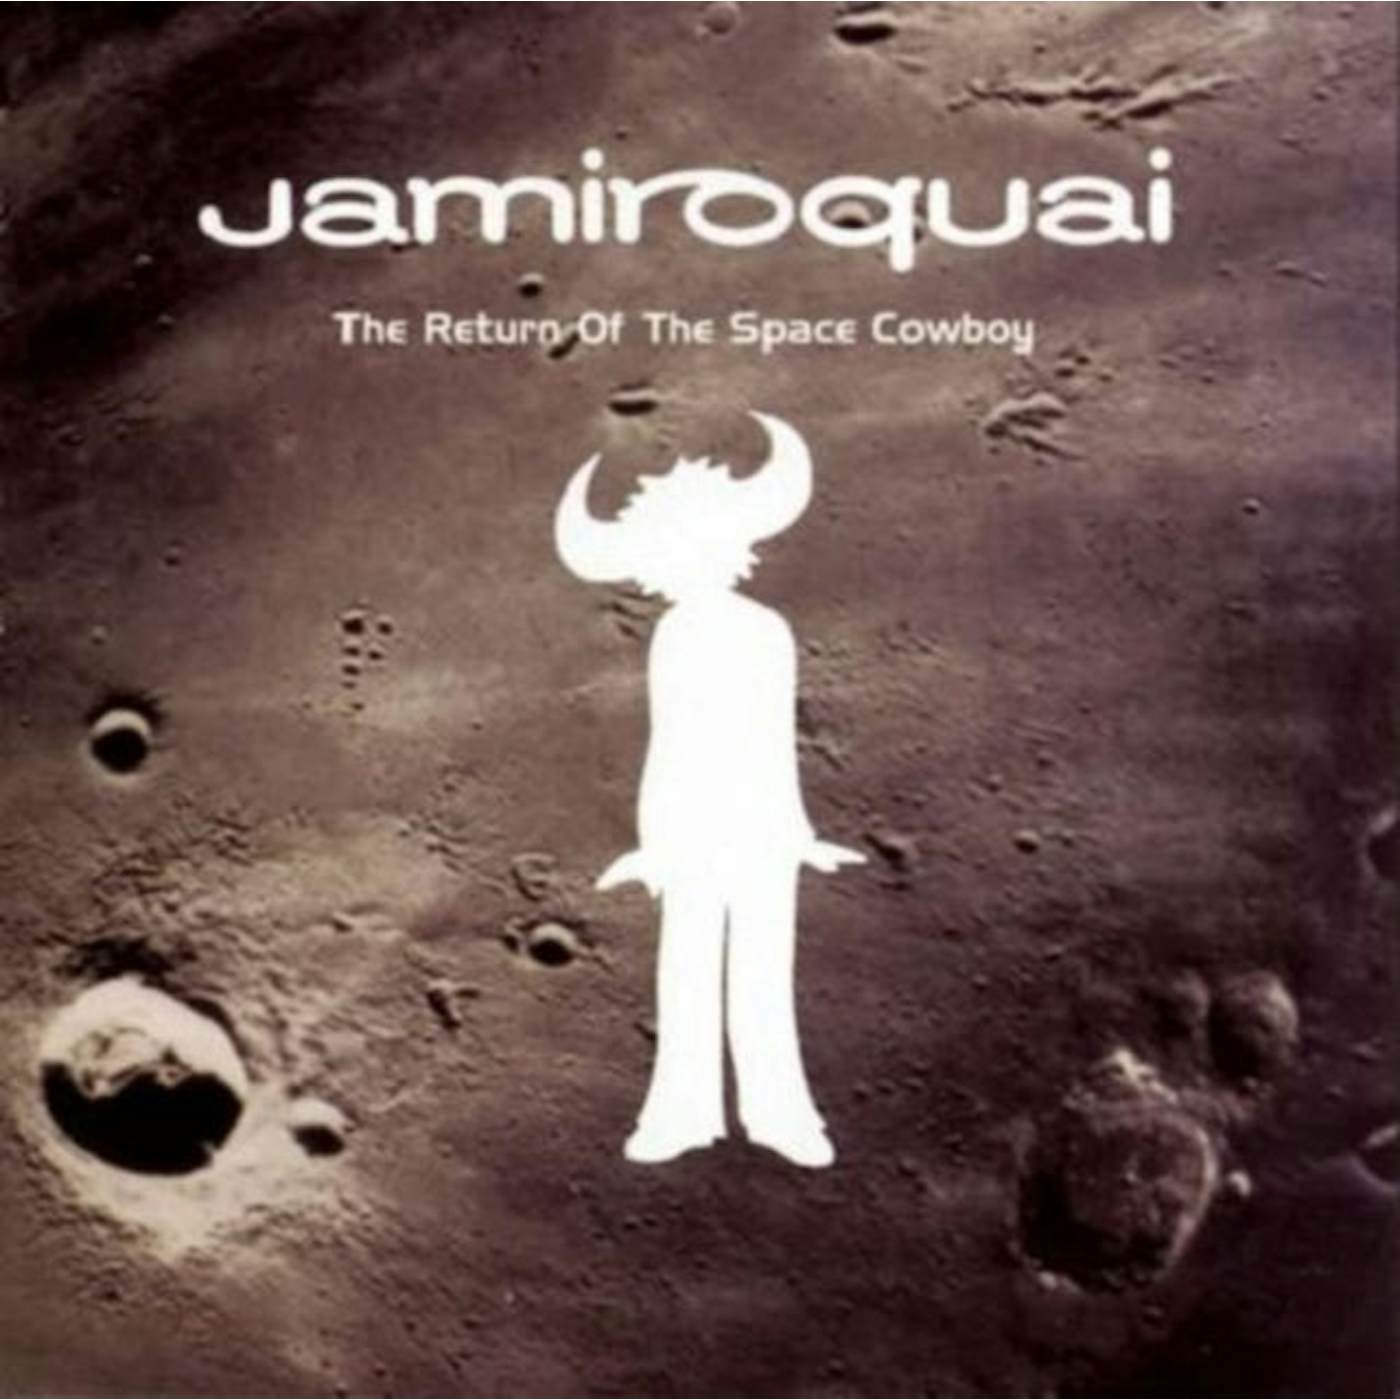 Jamiroquai LP Vinyl Record - The Return Of The Space Cowboy